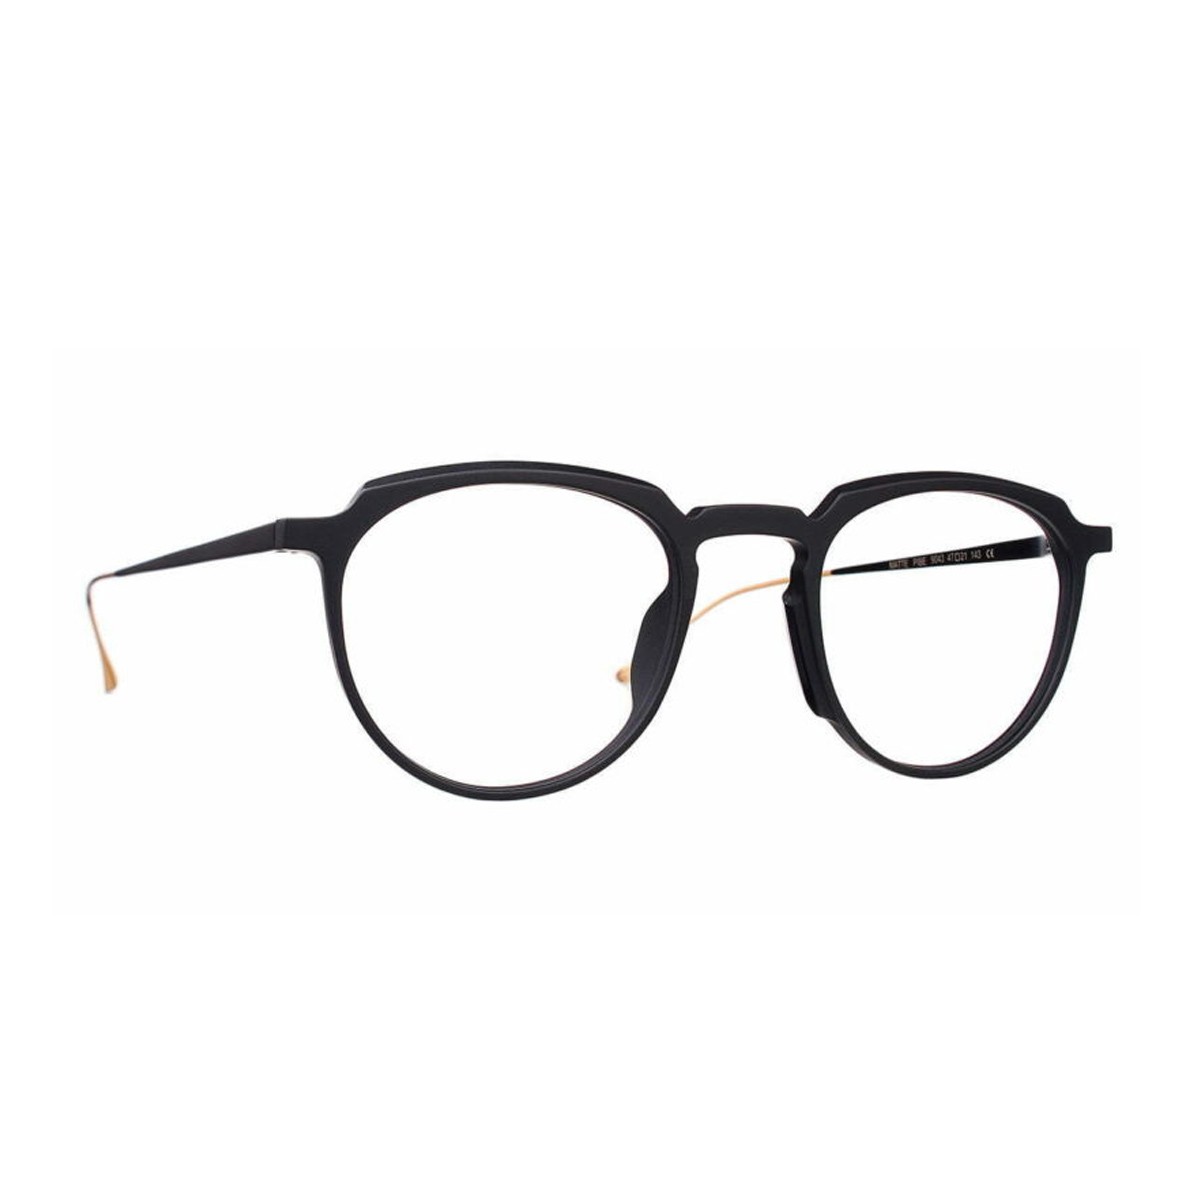 Talla Pibe 2 | Men's eyeglasses